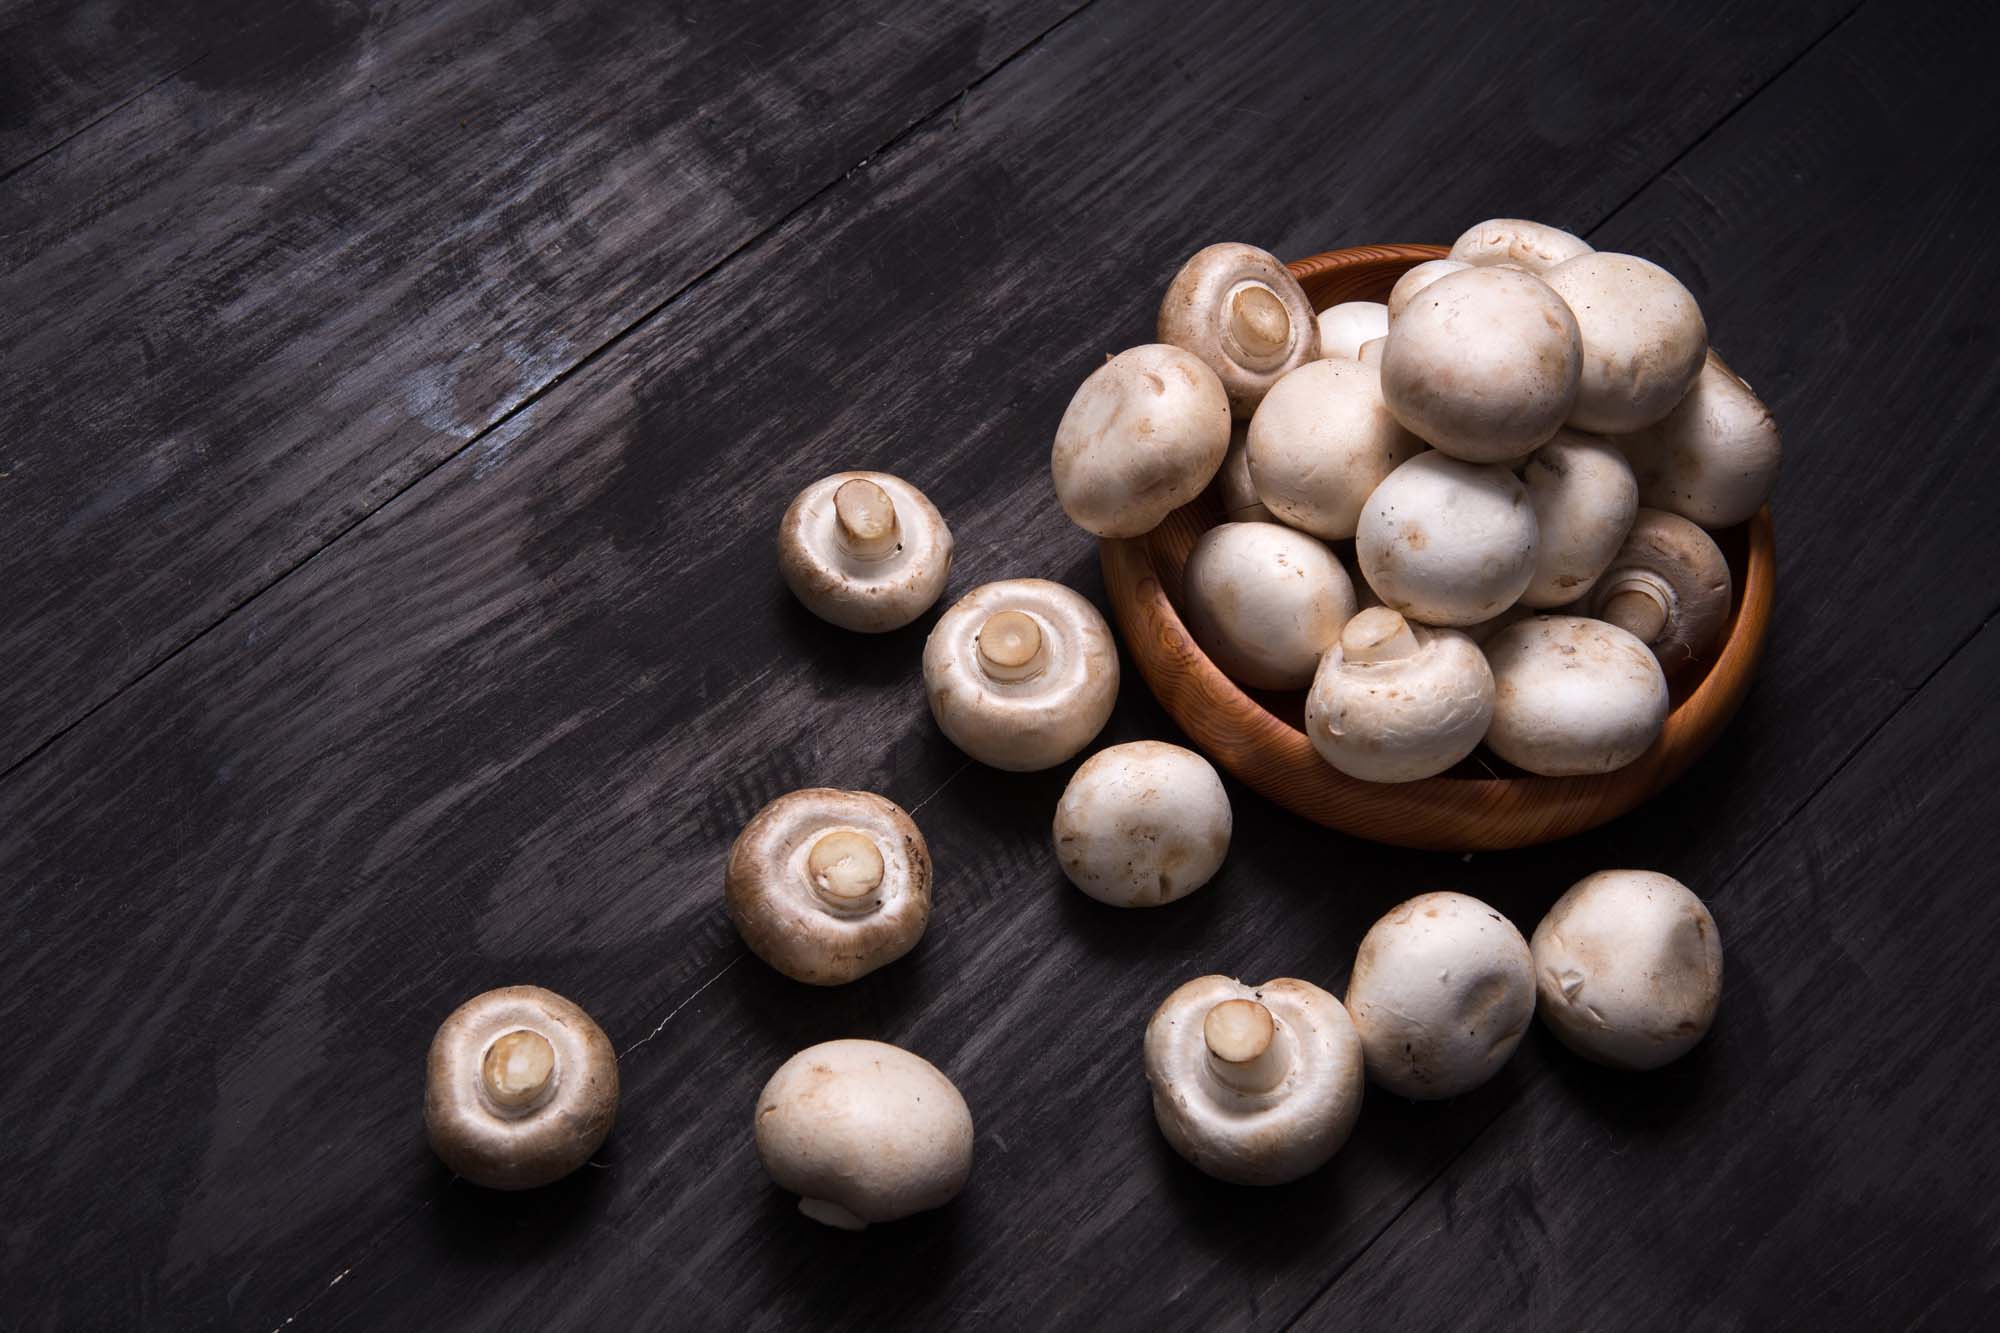 White Button Mushrooms  Mushroom Varieties 101